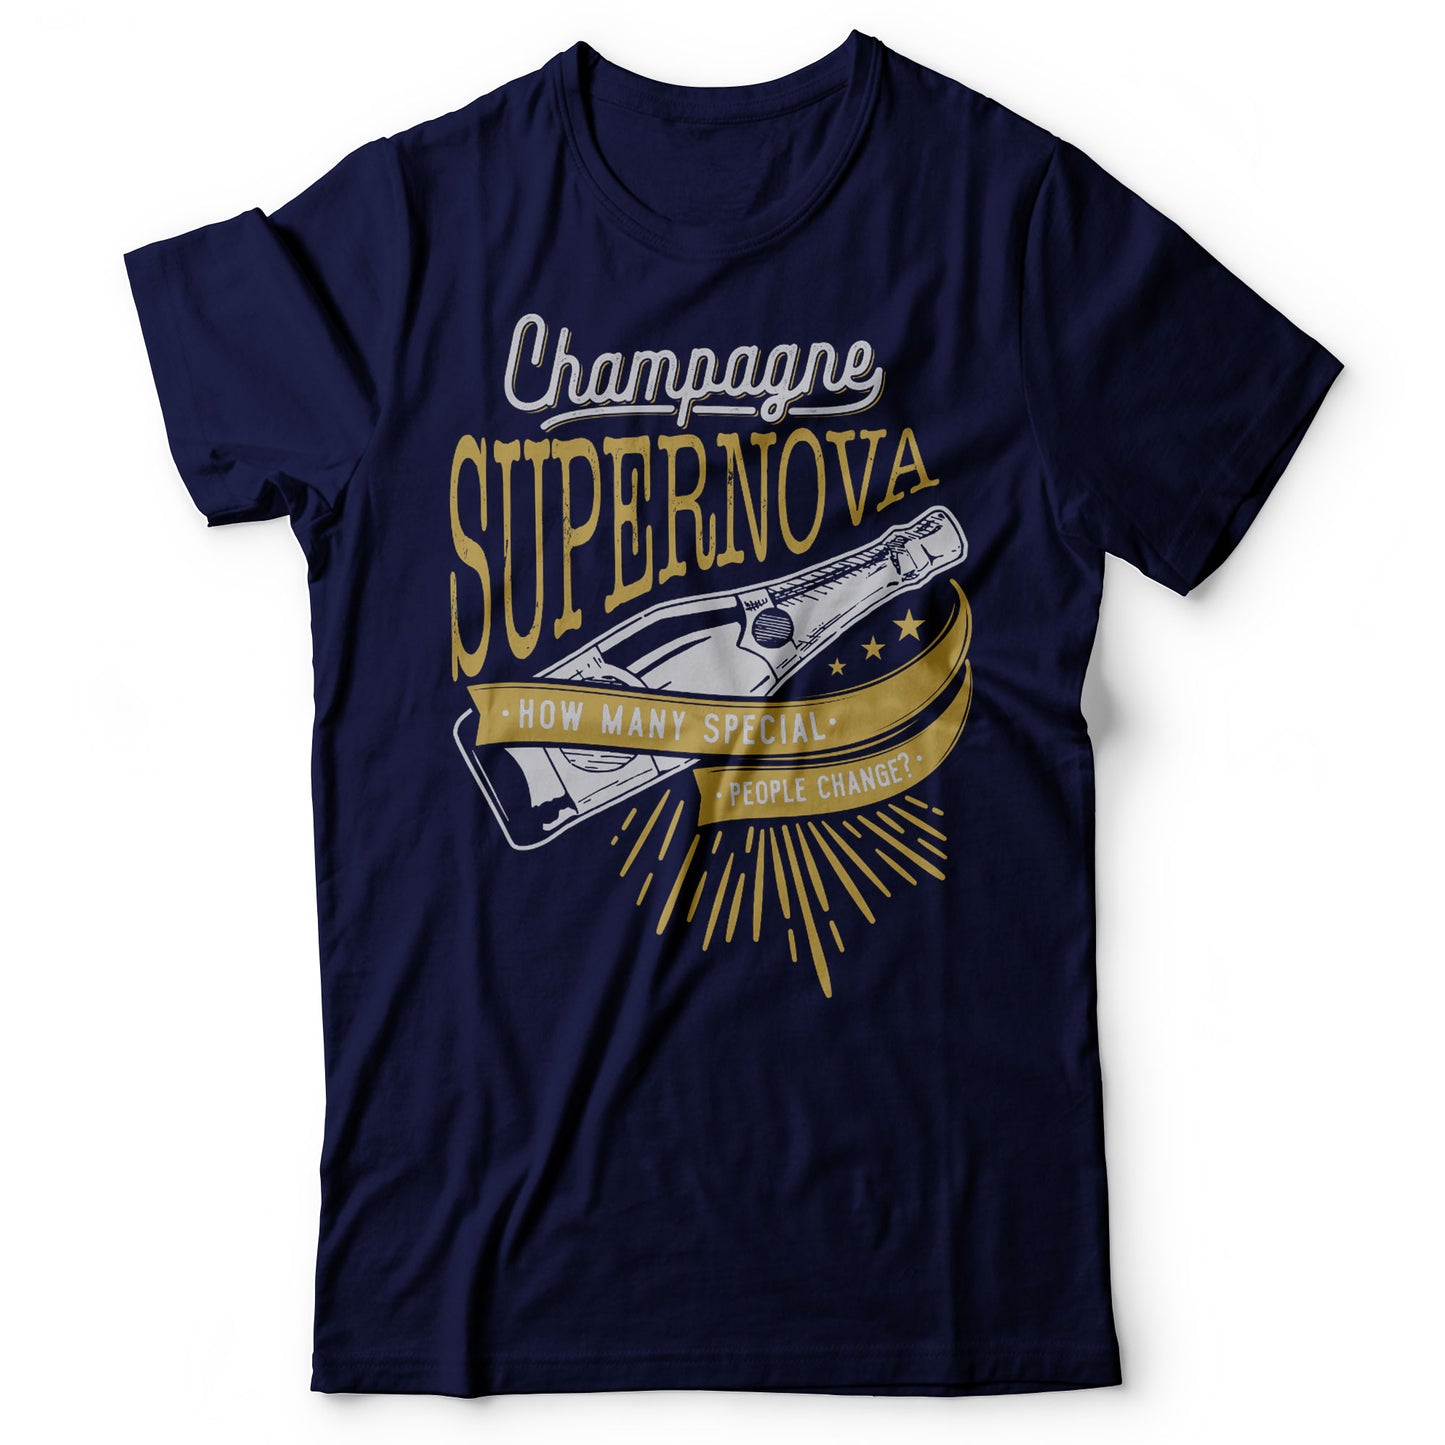 Oasis - Champagne Supernova - Men's T-shirt Navy Blue